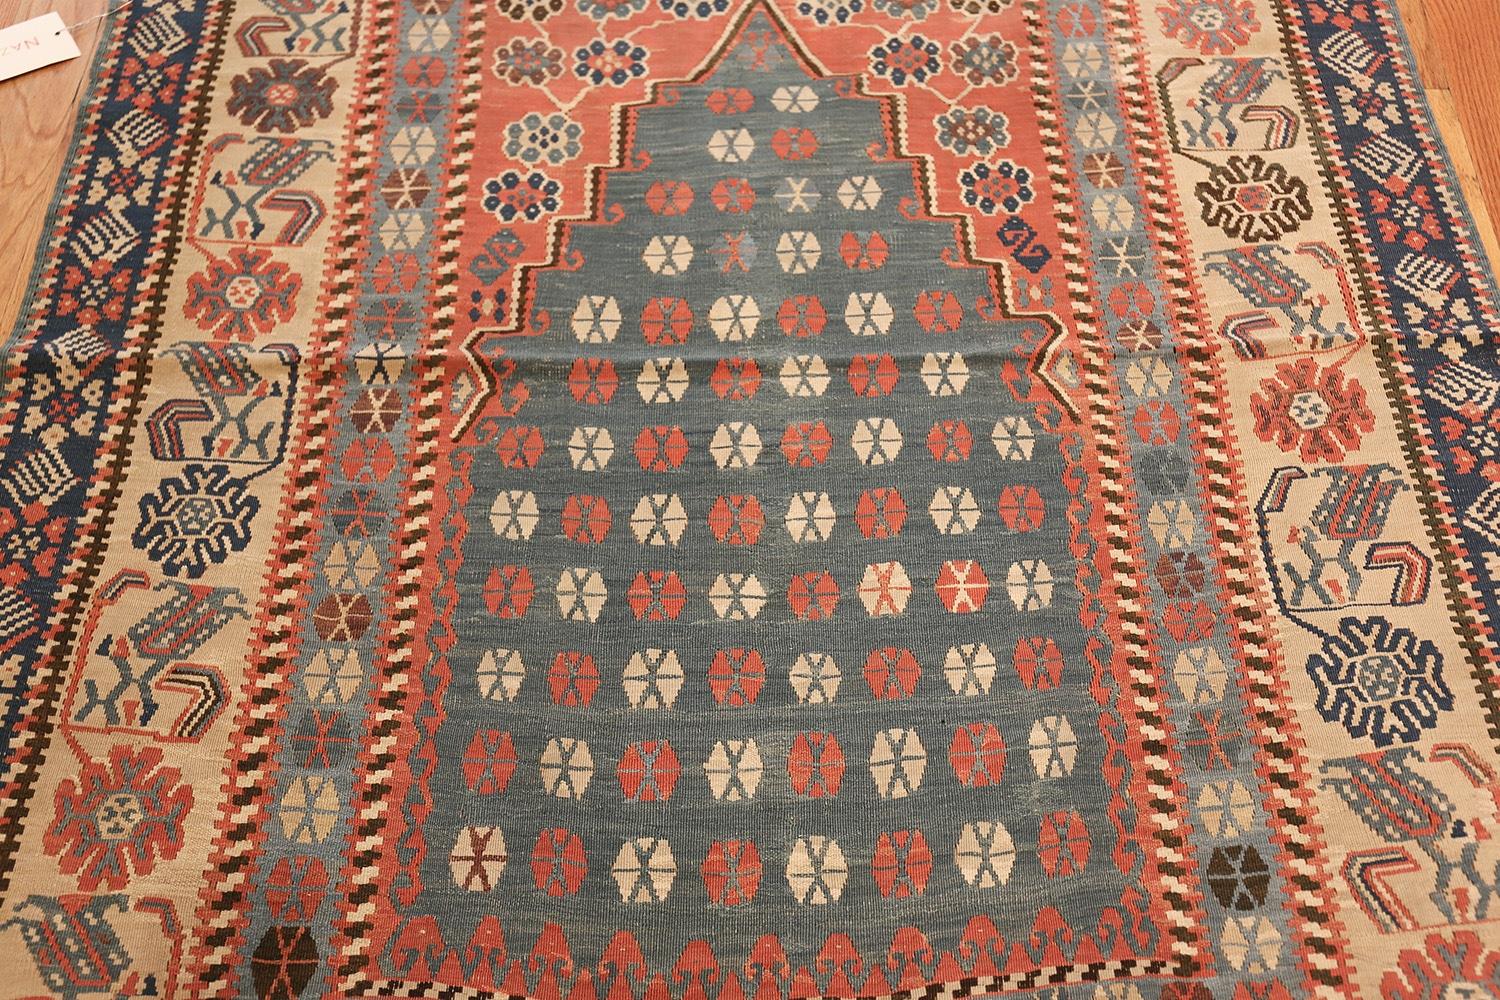 Antique Turkish Prayer Design Kilim Rug. Size: 4 ft 3 in x 5 ft 4 in 1